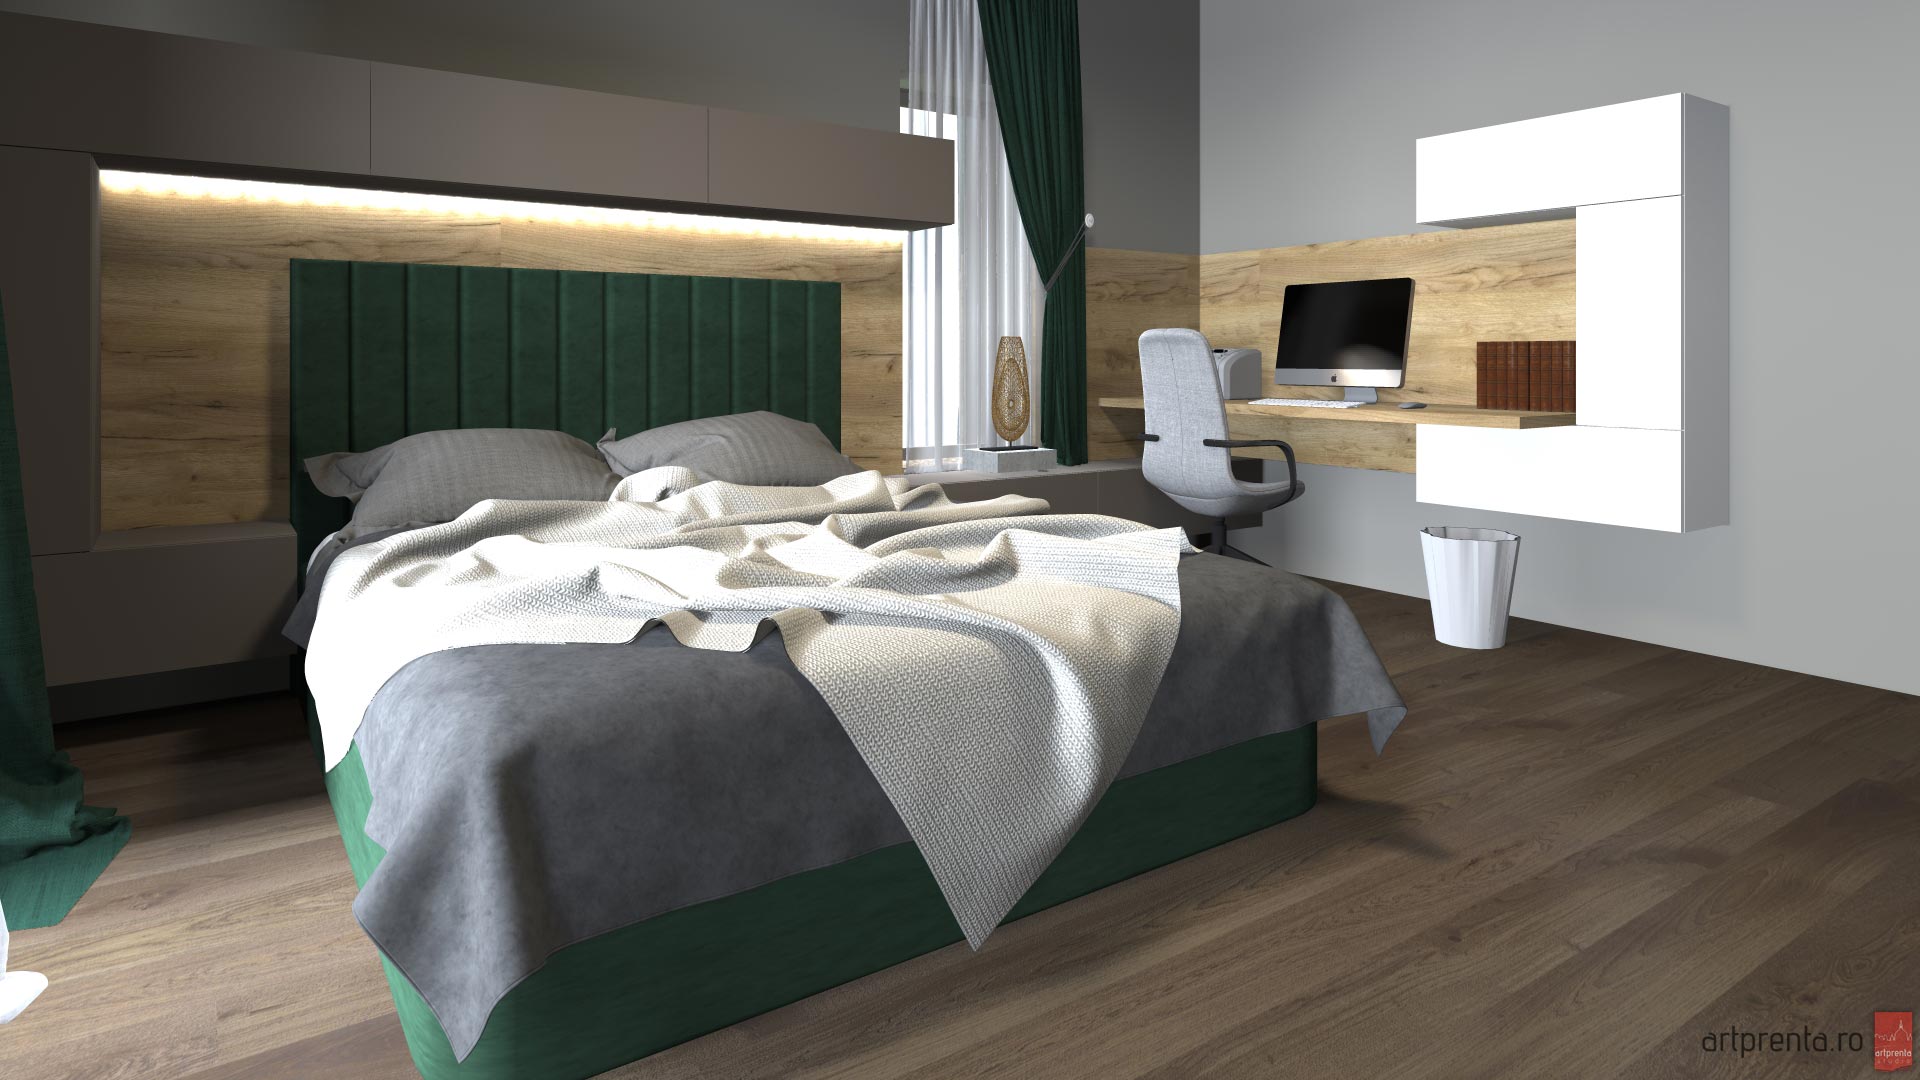 Design interior dormitor adolescent casa Grigorescu